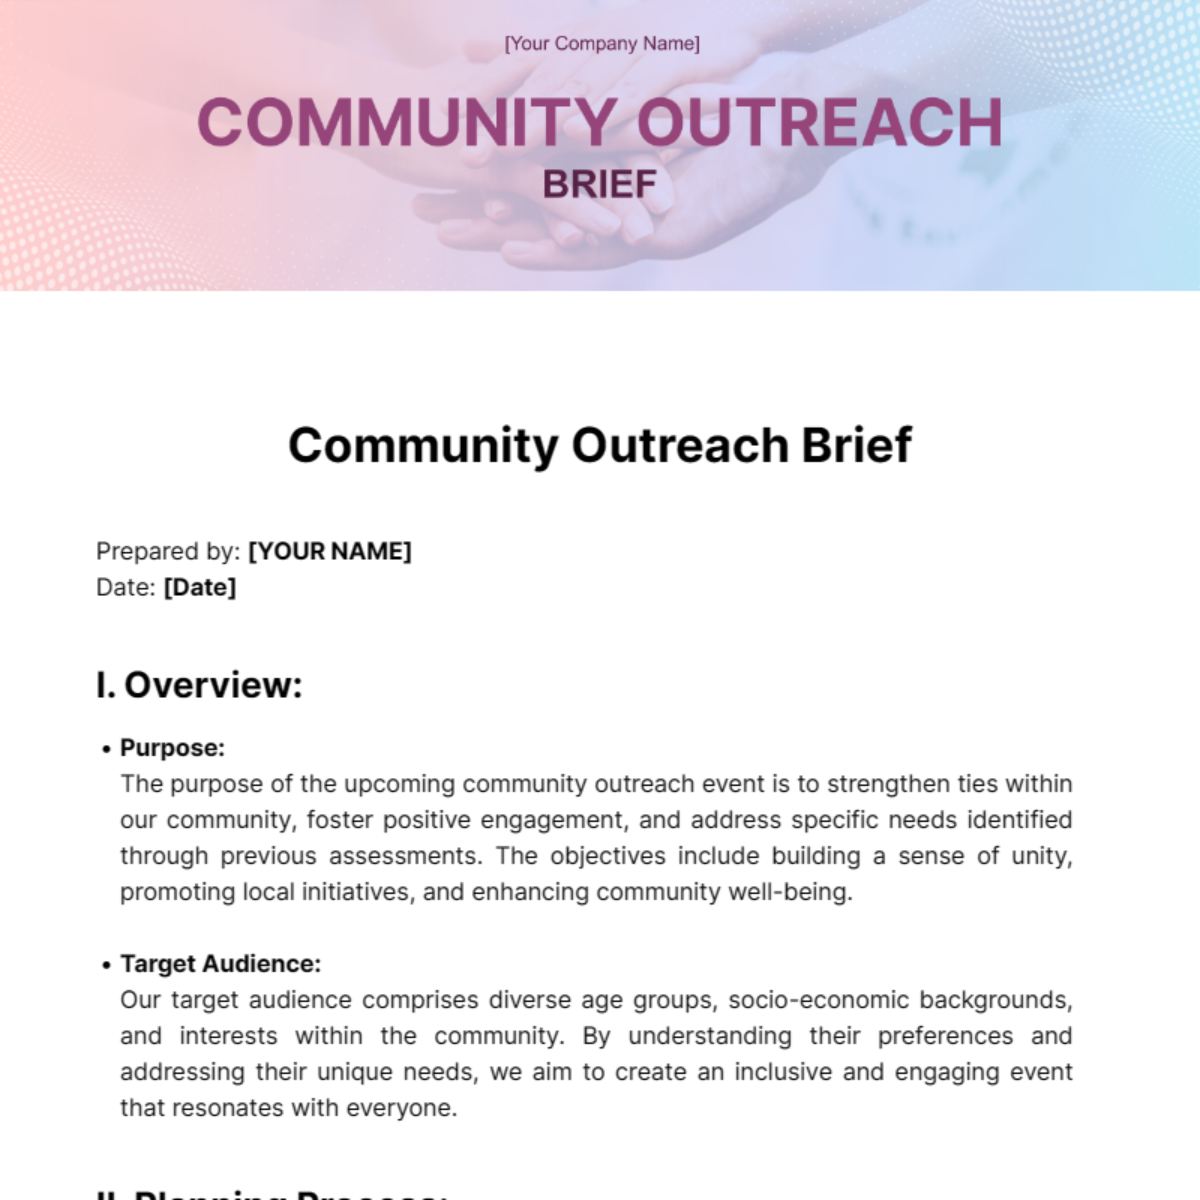 Community Outreach Brief Template